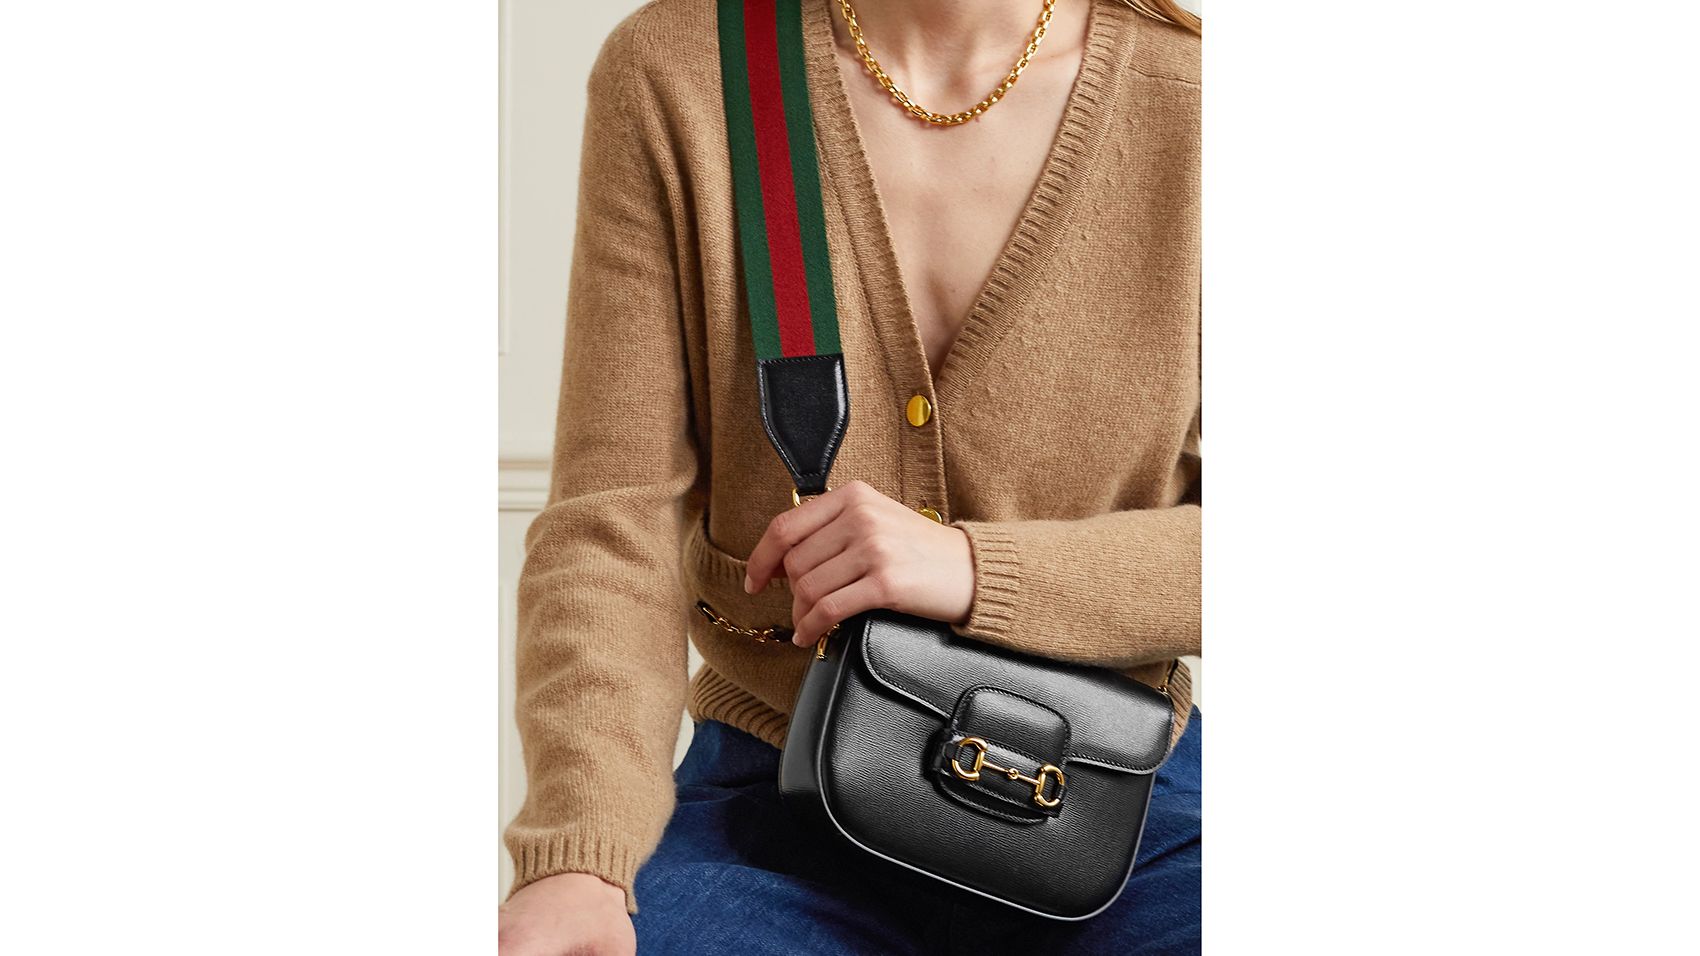 Gucci's 1955 Horsebit Bag Is The Latest Celebrity Favourite